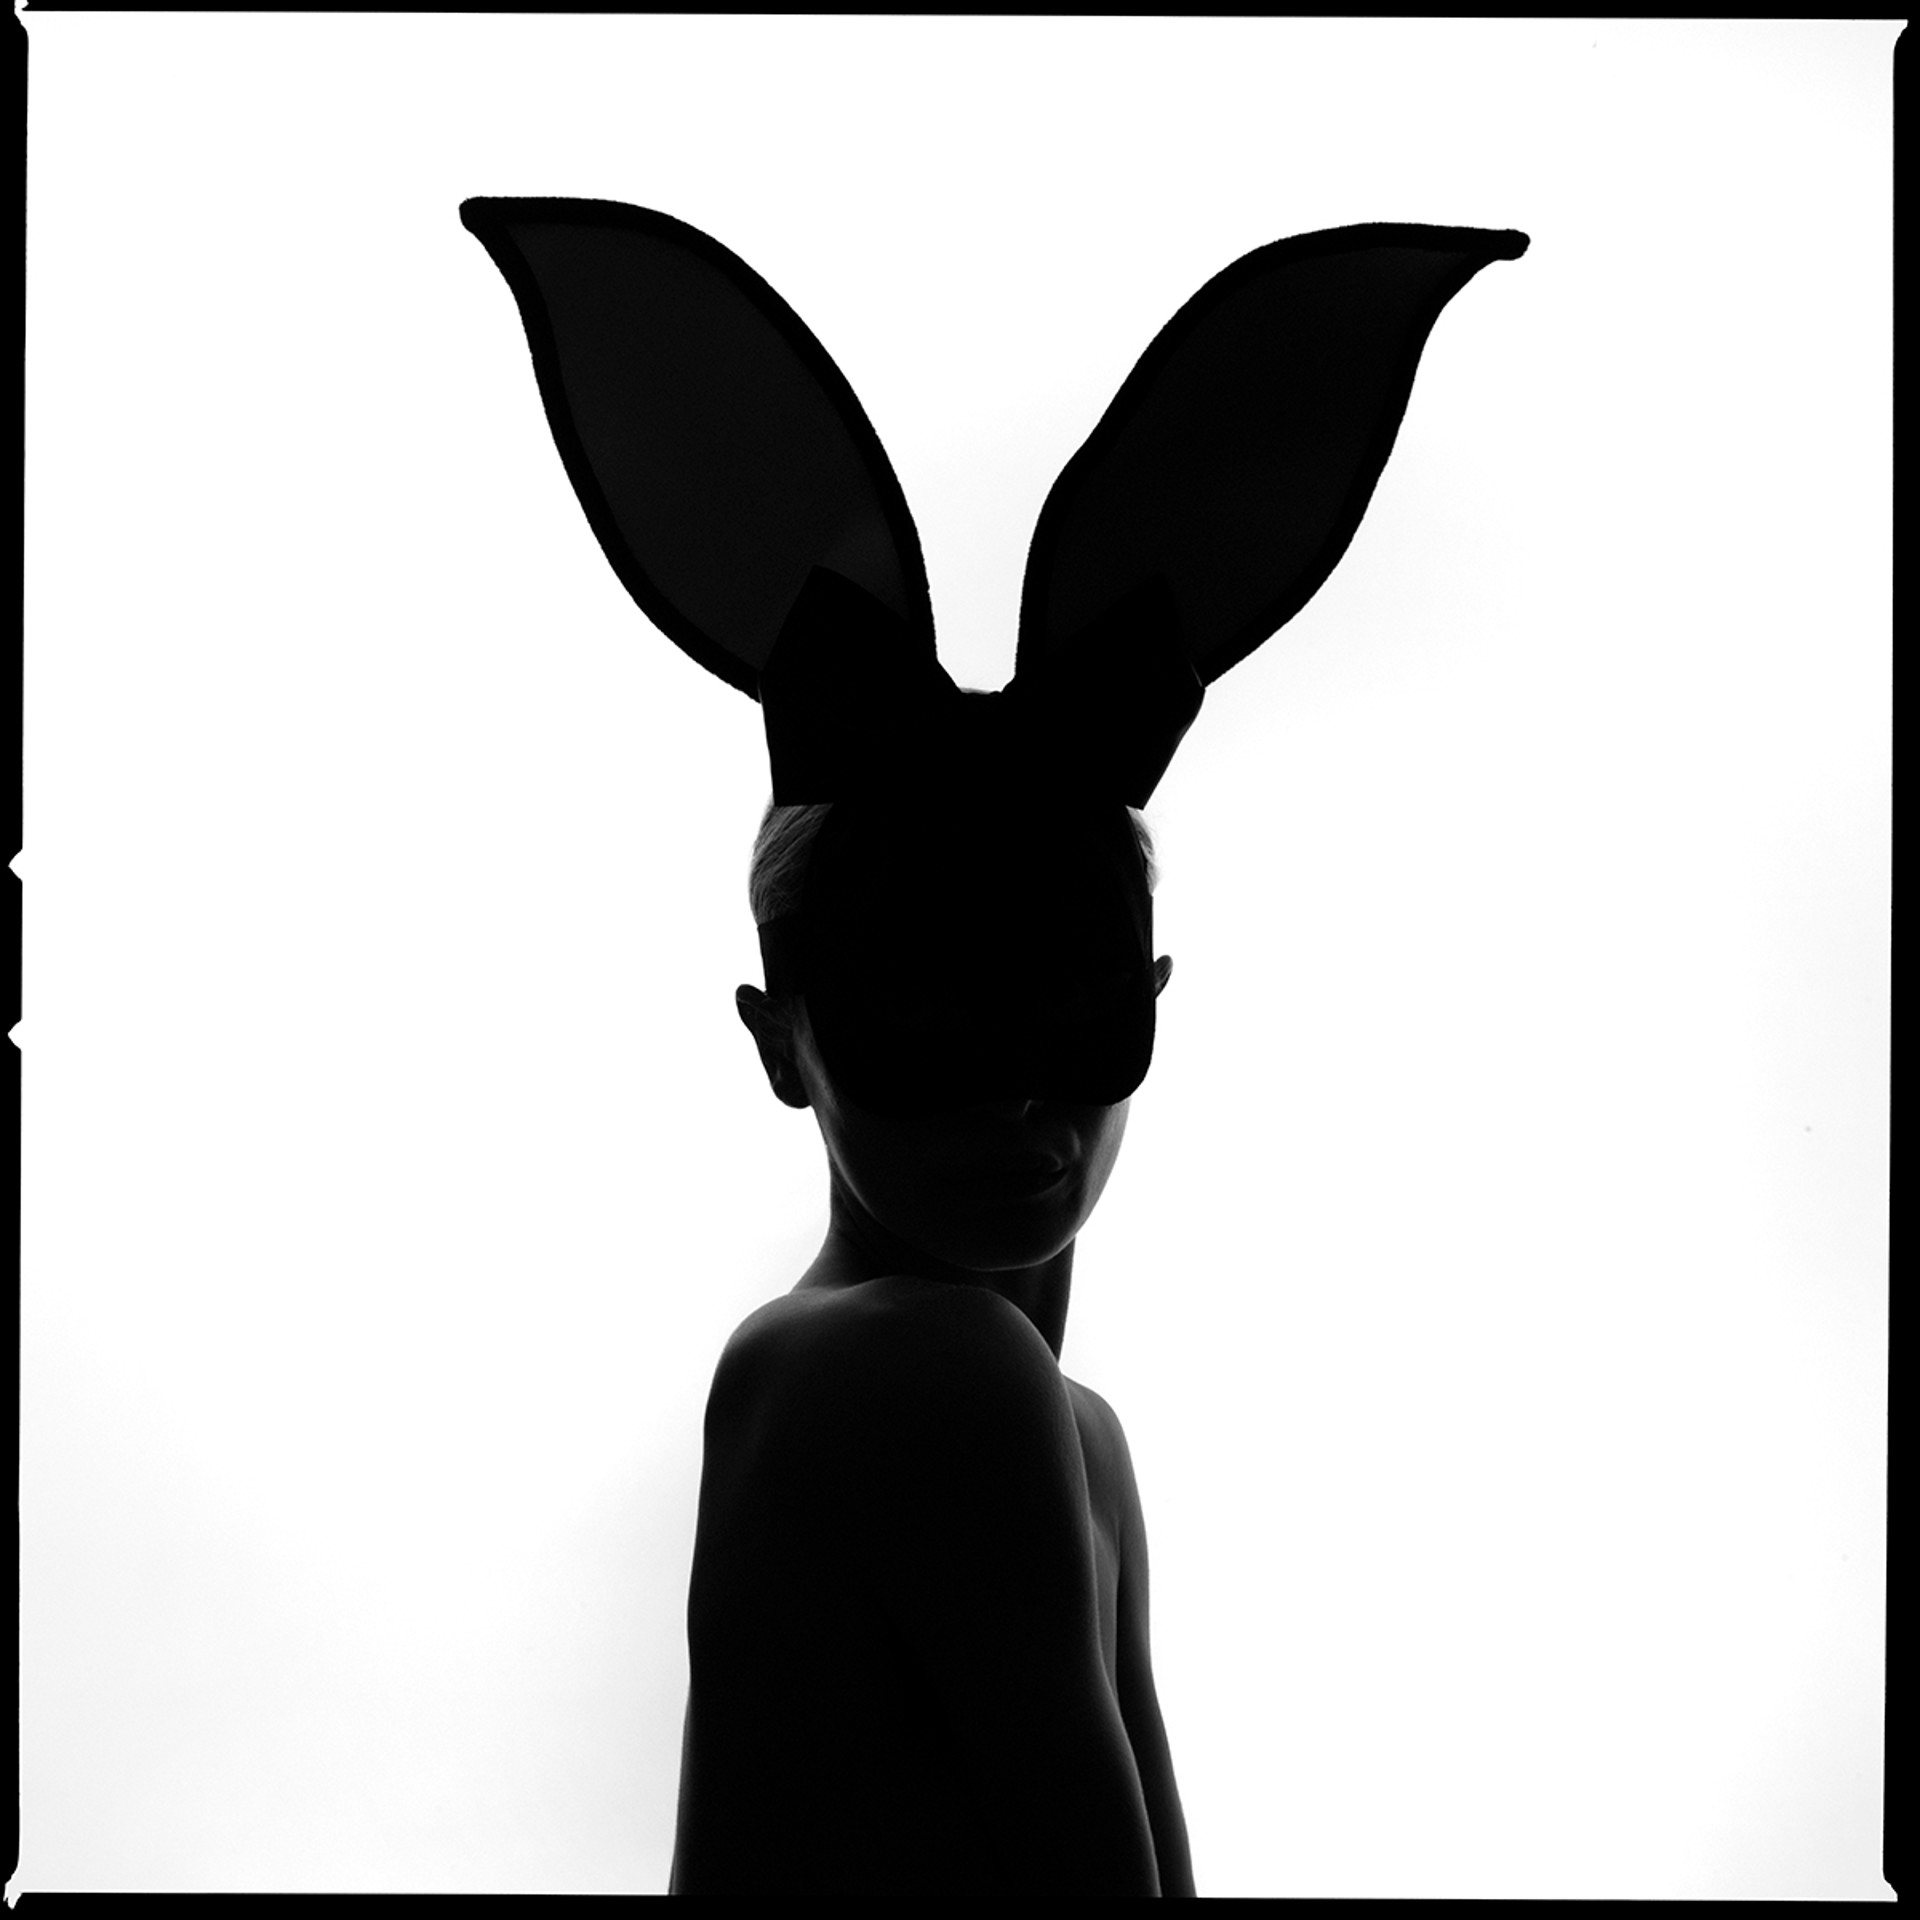 Bunny Silhouette by Tyler Shields